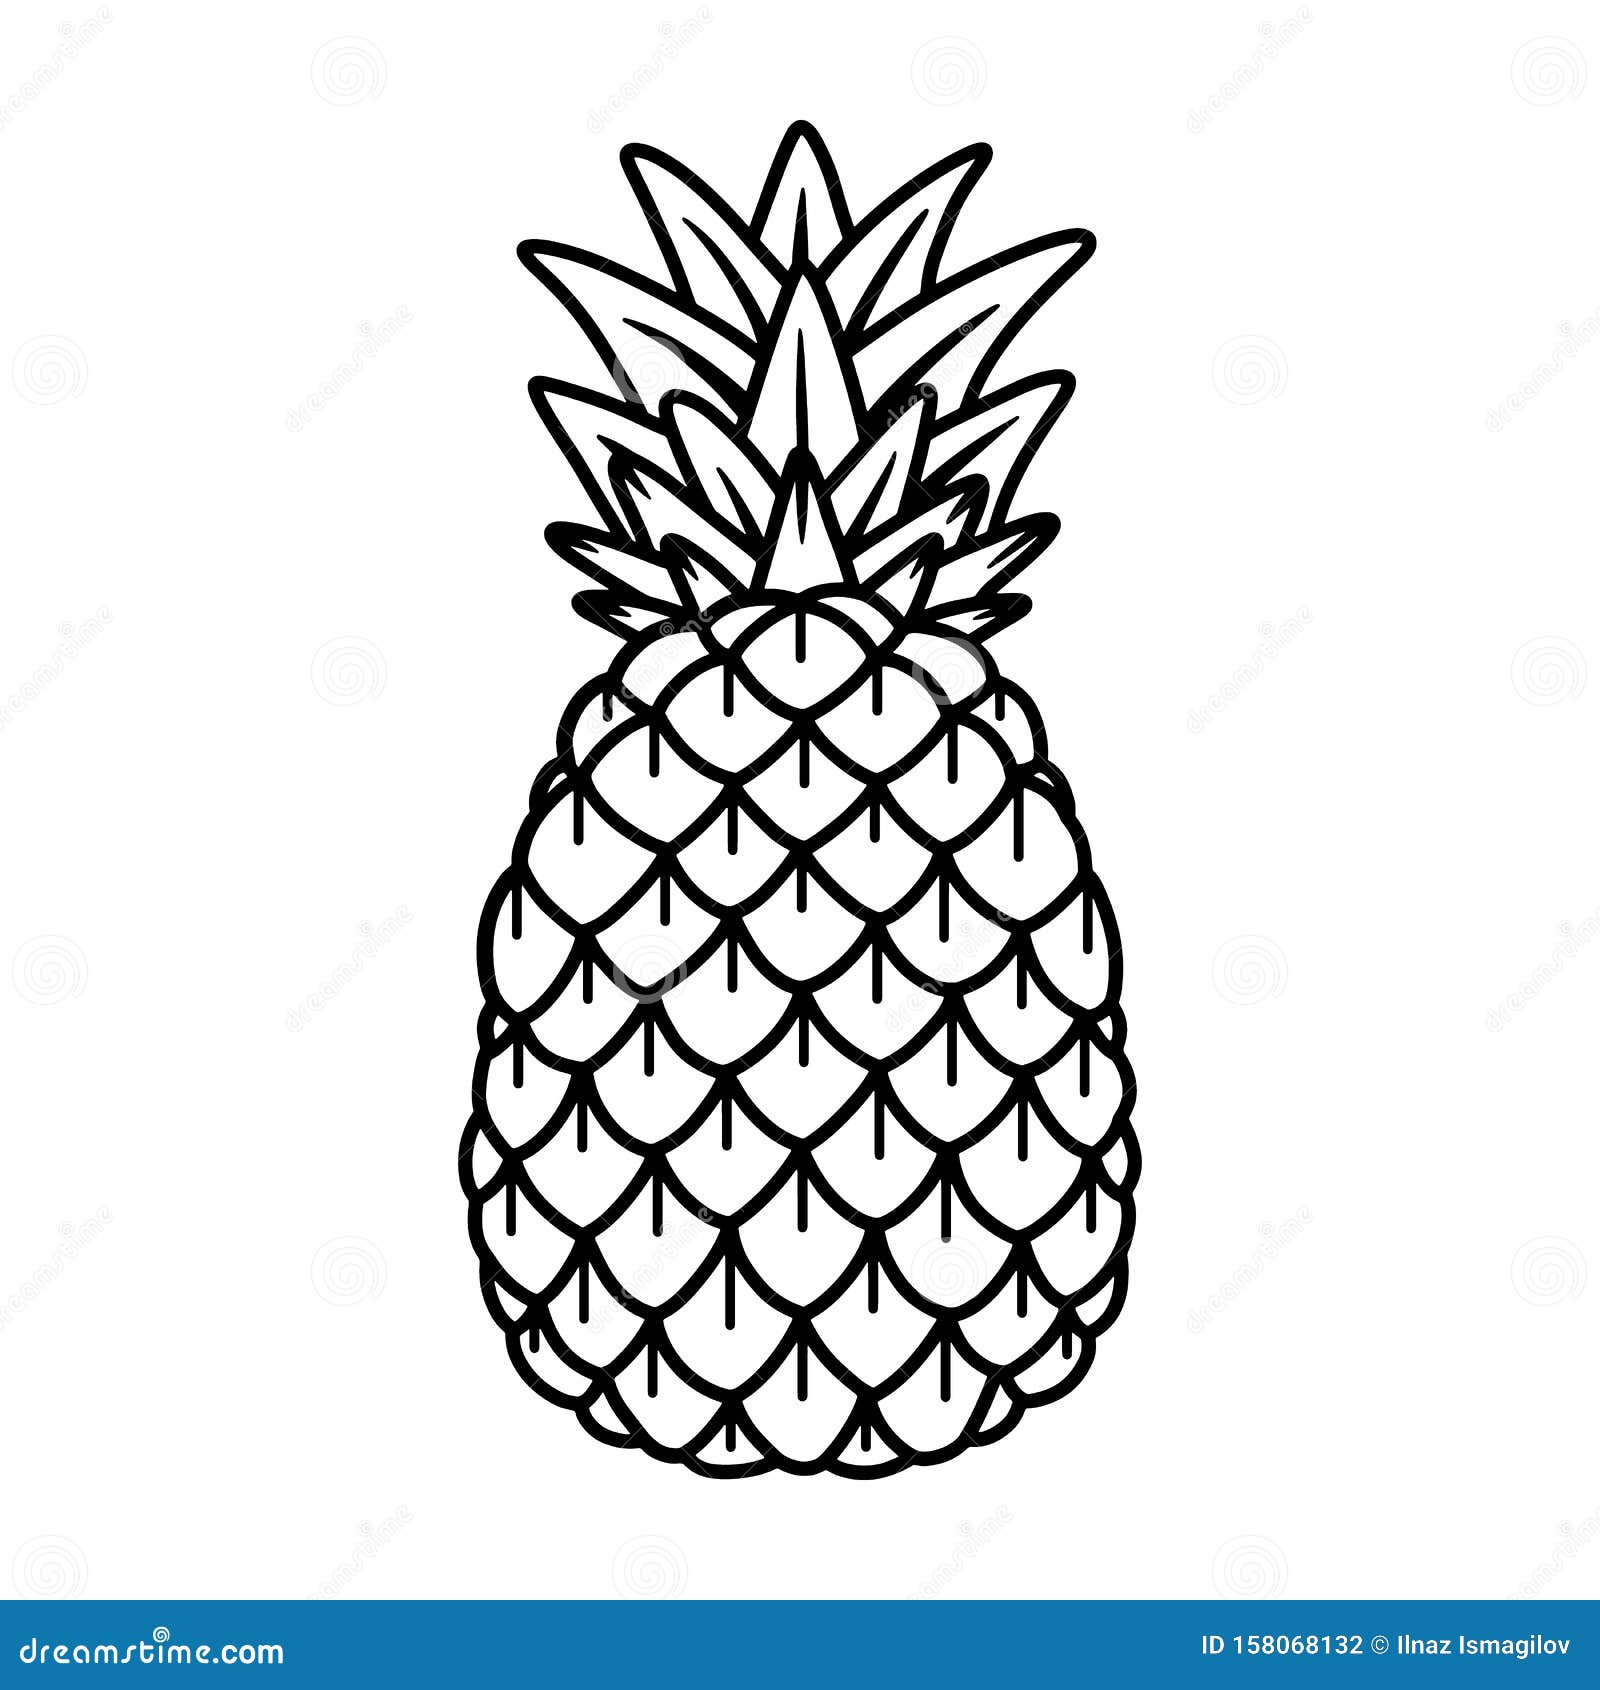 Pineapple Tattoo Stock Illustrations – 462 Pineapple Tattoo Stock